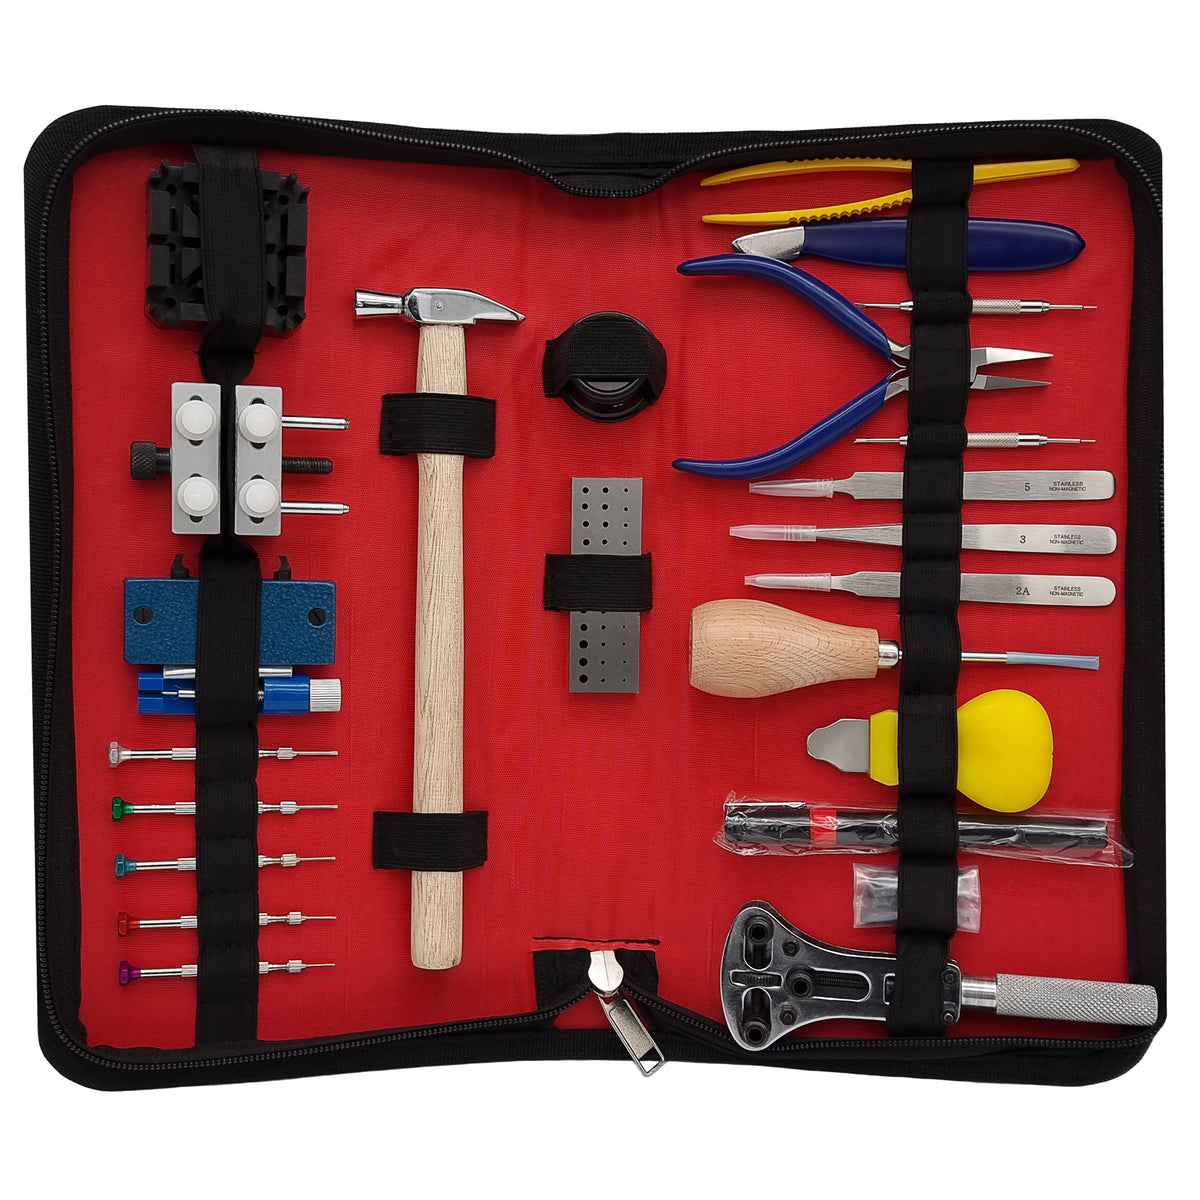 <transcy>Pro Artisan Leather Kit for the repair and maintenance of Watches | 21 pcs + a Masar 8 pcs Premium Spring Bar Kit + 2 tools</transcy>